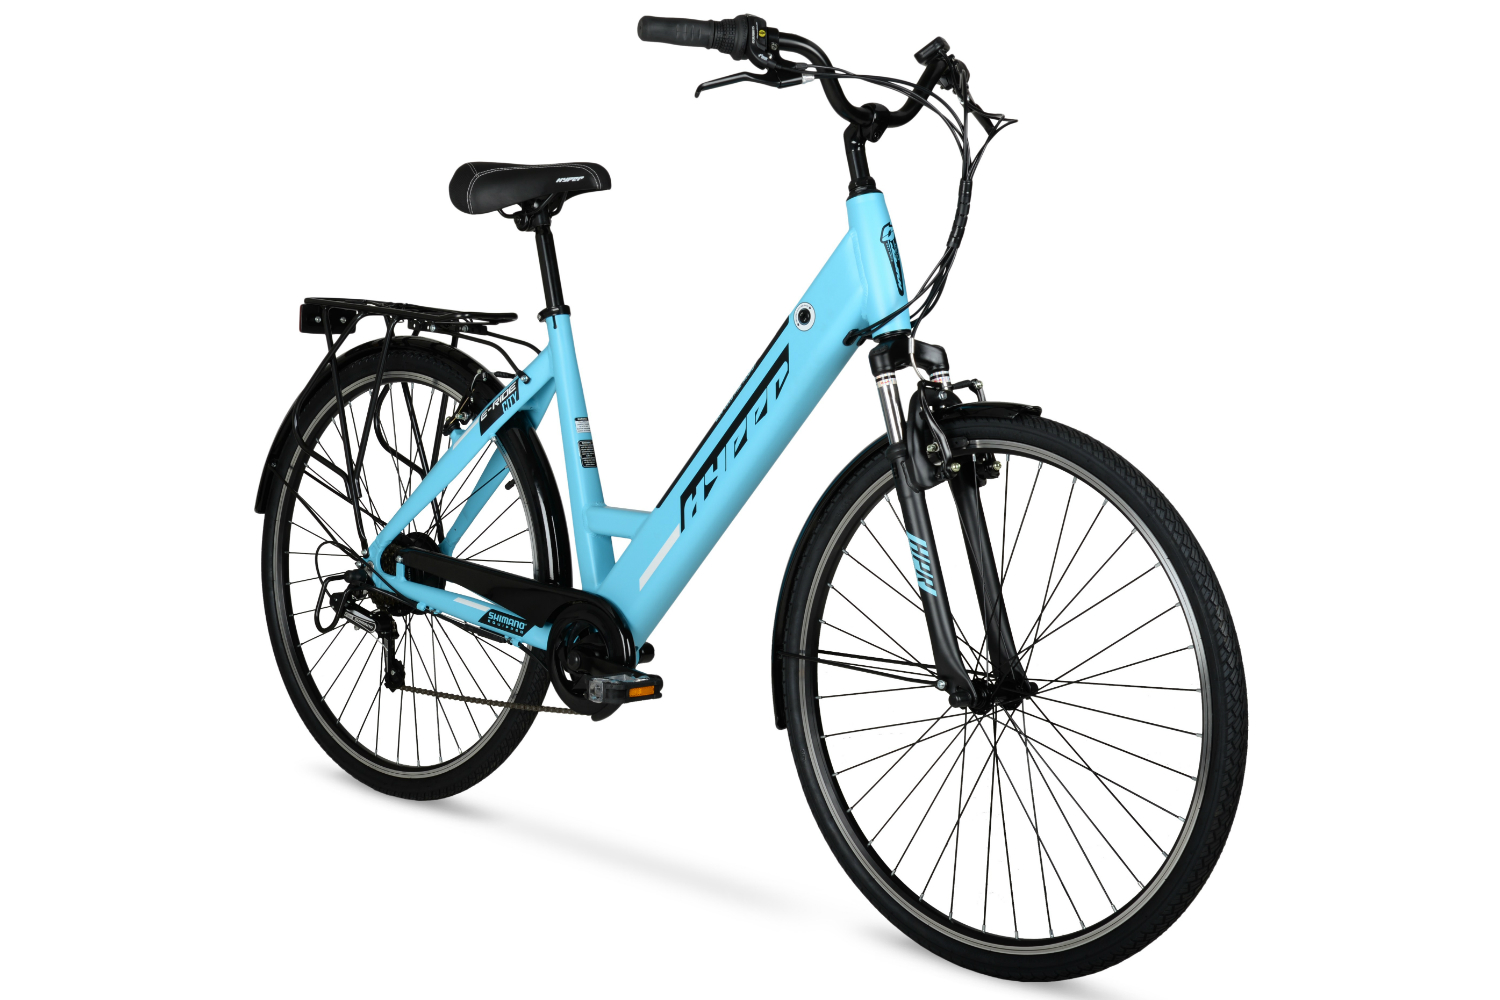 walmart slashes prices on hyper e ride electric hybrid bikes blue bike 700c wheels 1